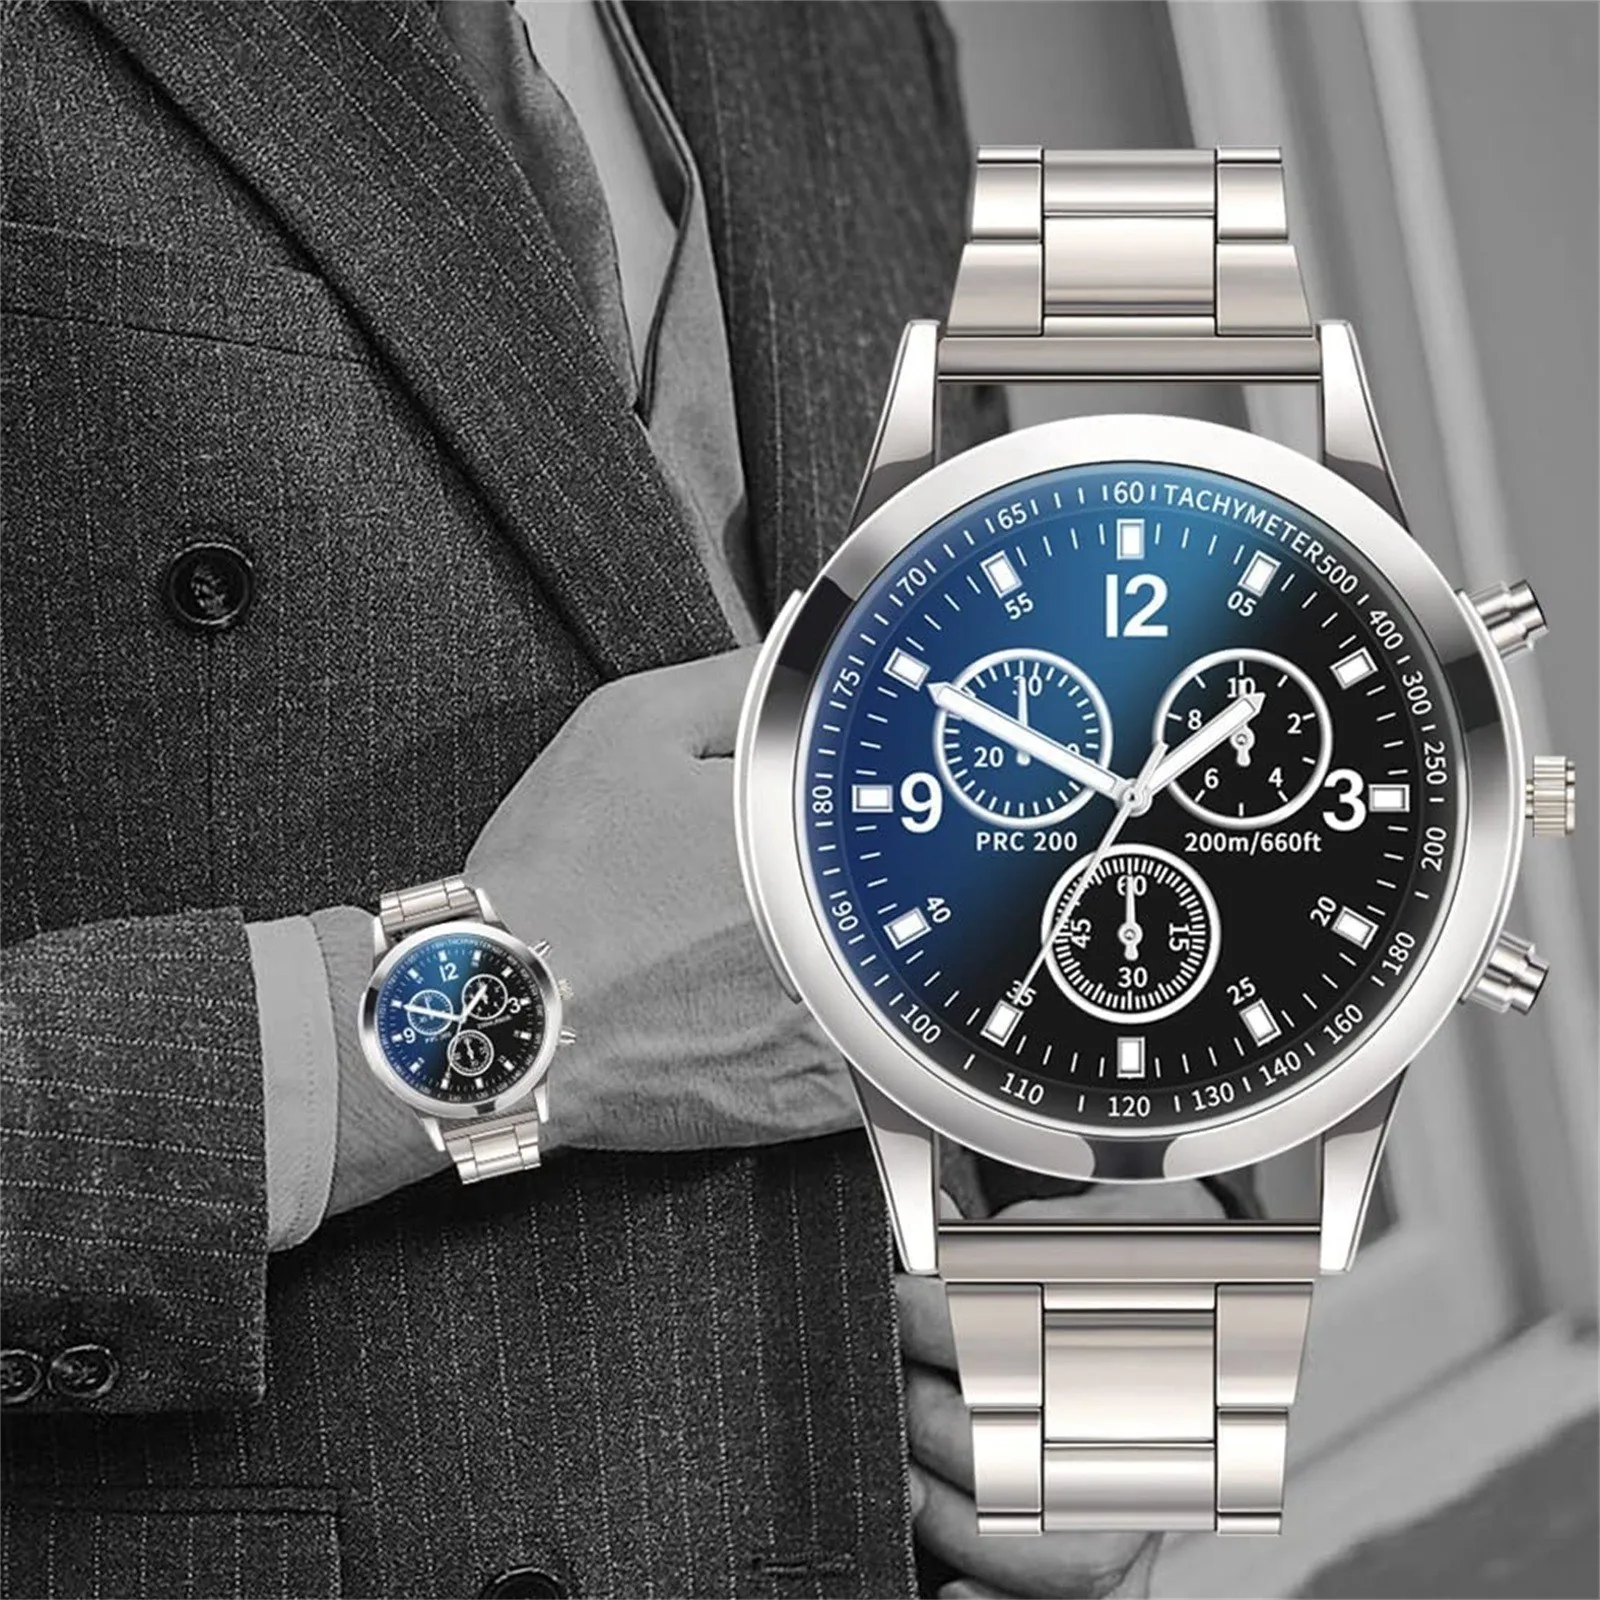 

Luxury Watches Quartz Watch Stainless Steel Dial Casual Bracele Watch Fashion Classic Wrist Watches For Men Saat Erkek Kol Saati